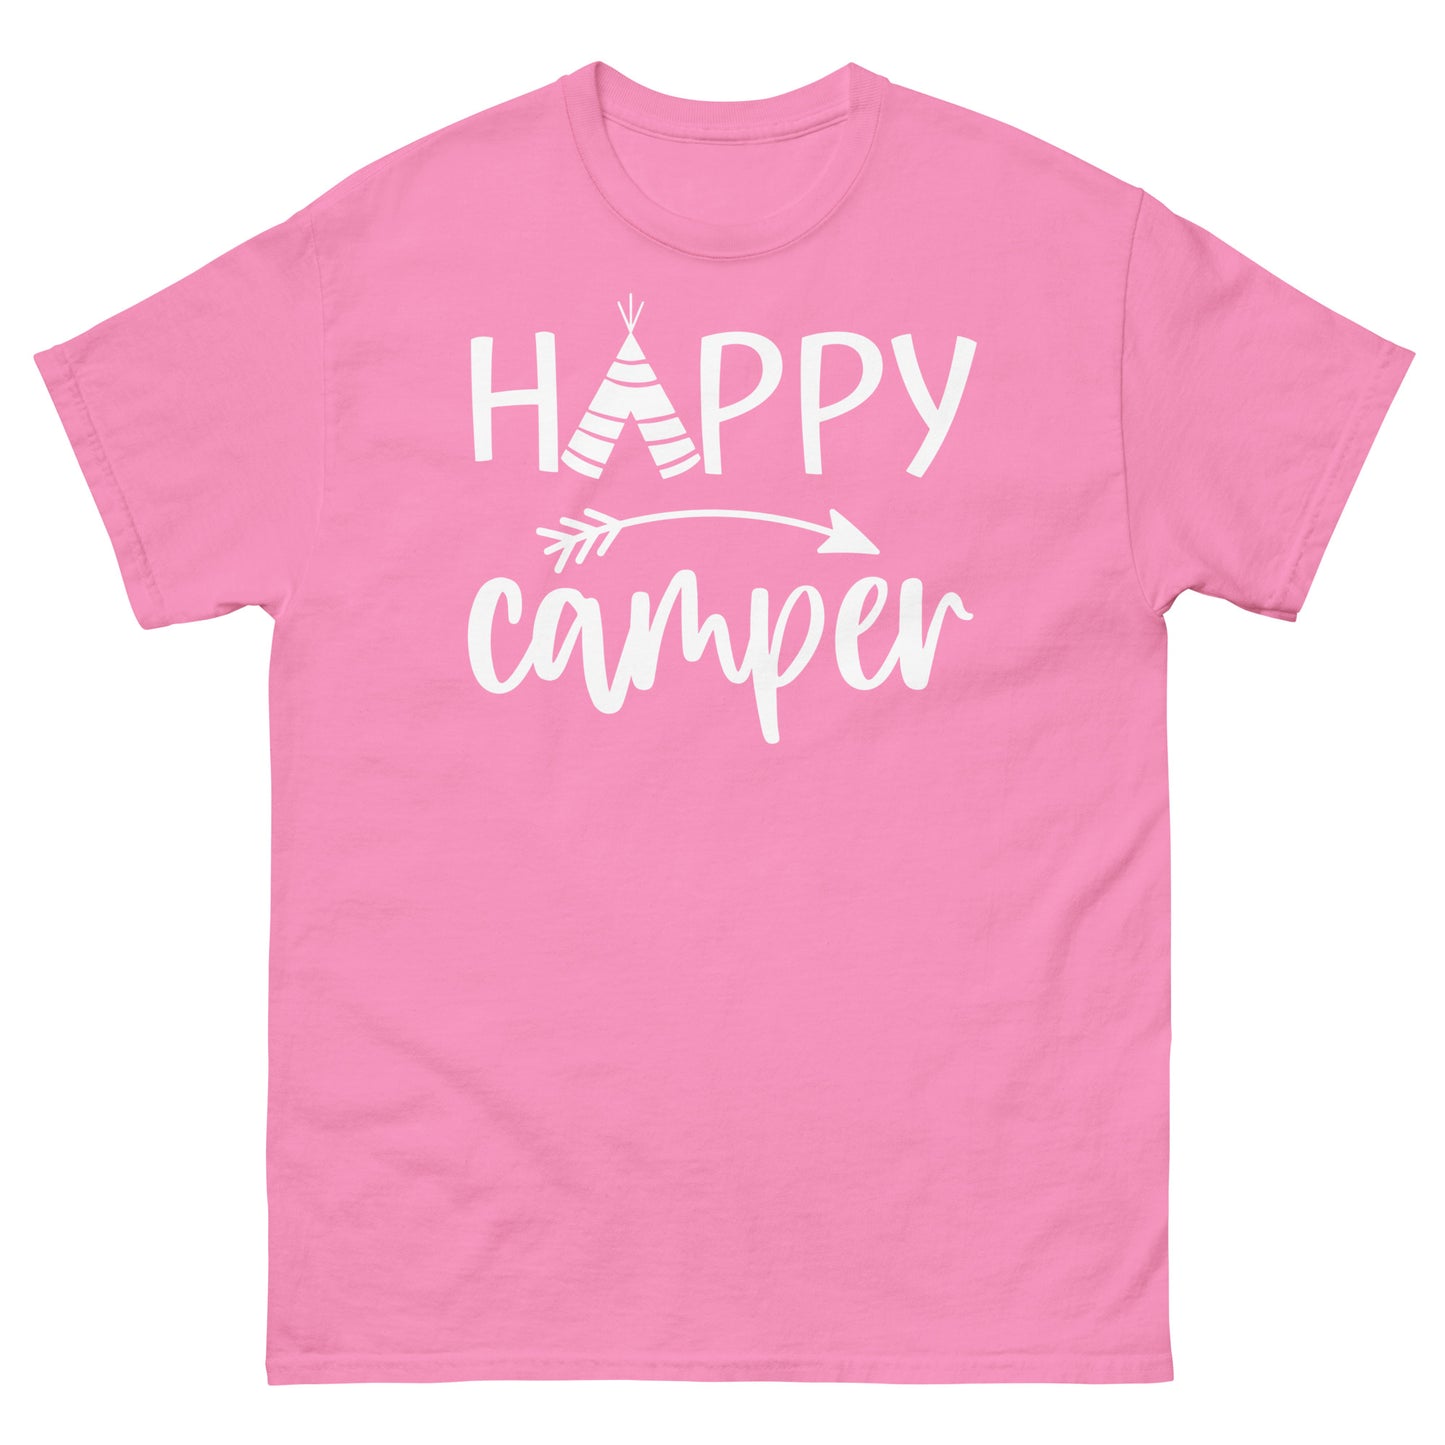 Happy Camper - classic tee